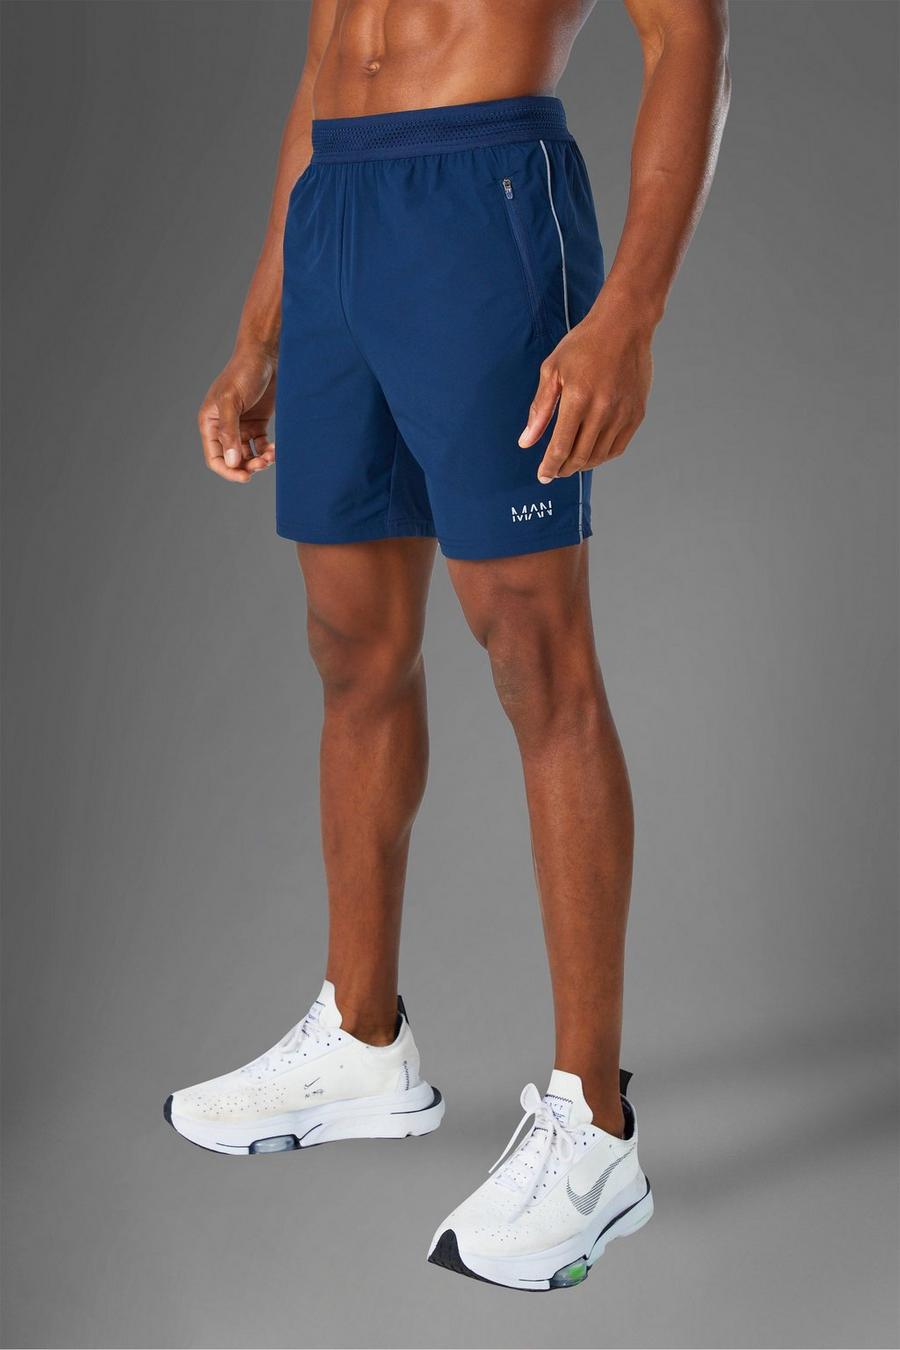 Pantalón corto MAN Active ligero, Navy azul marino image number 1